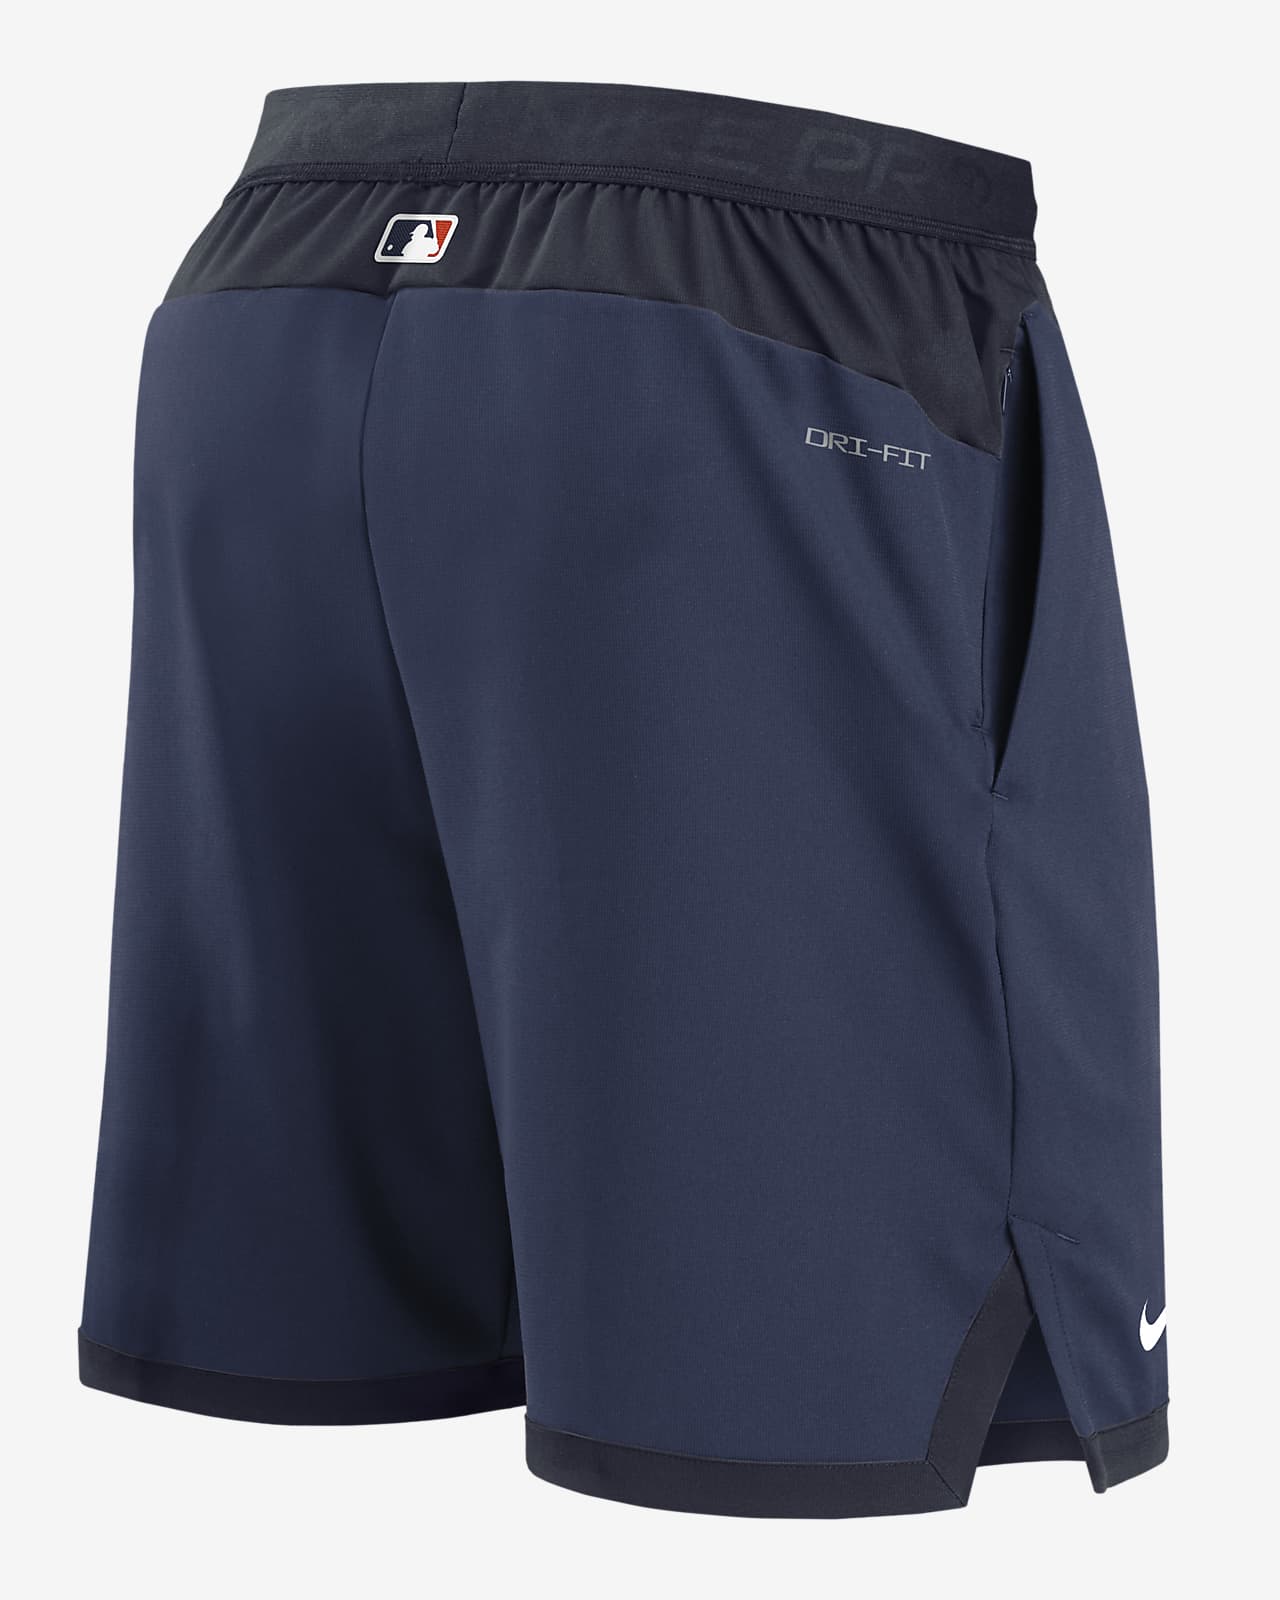 Nike Dri-FIT Travel (MLB Houston Astros) Men's Pants.